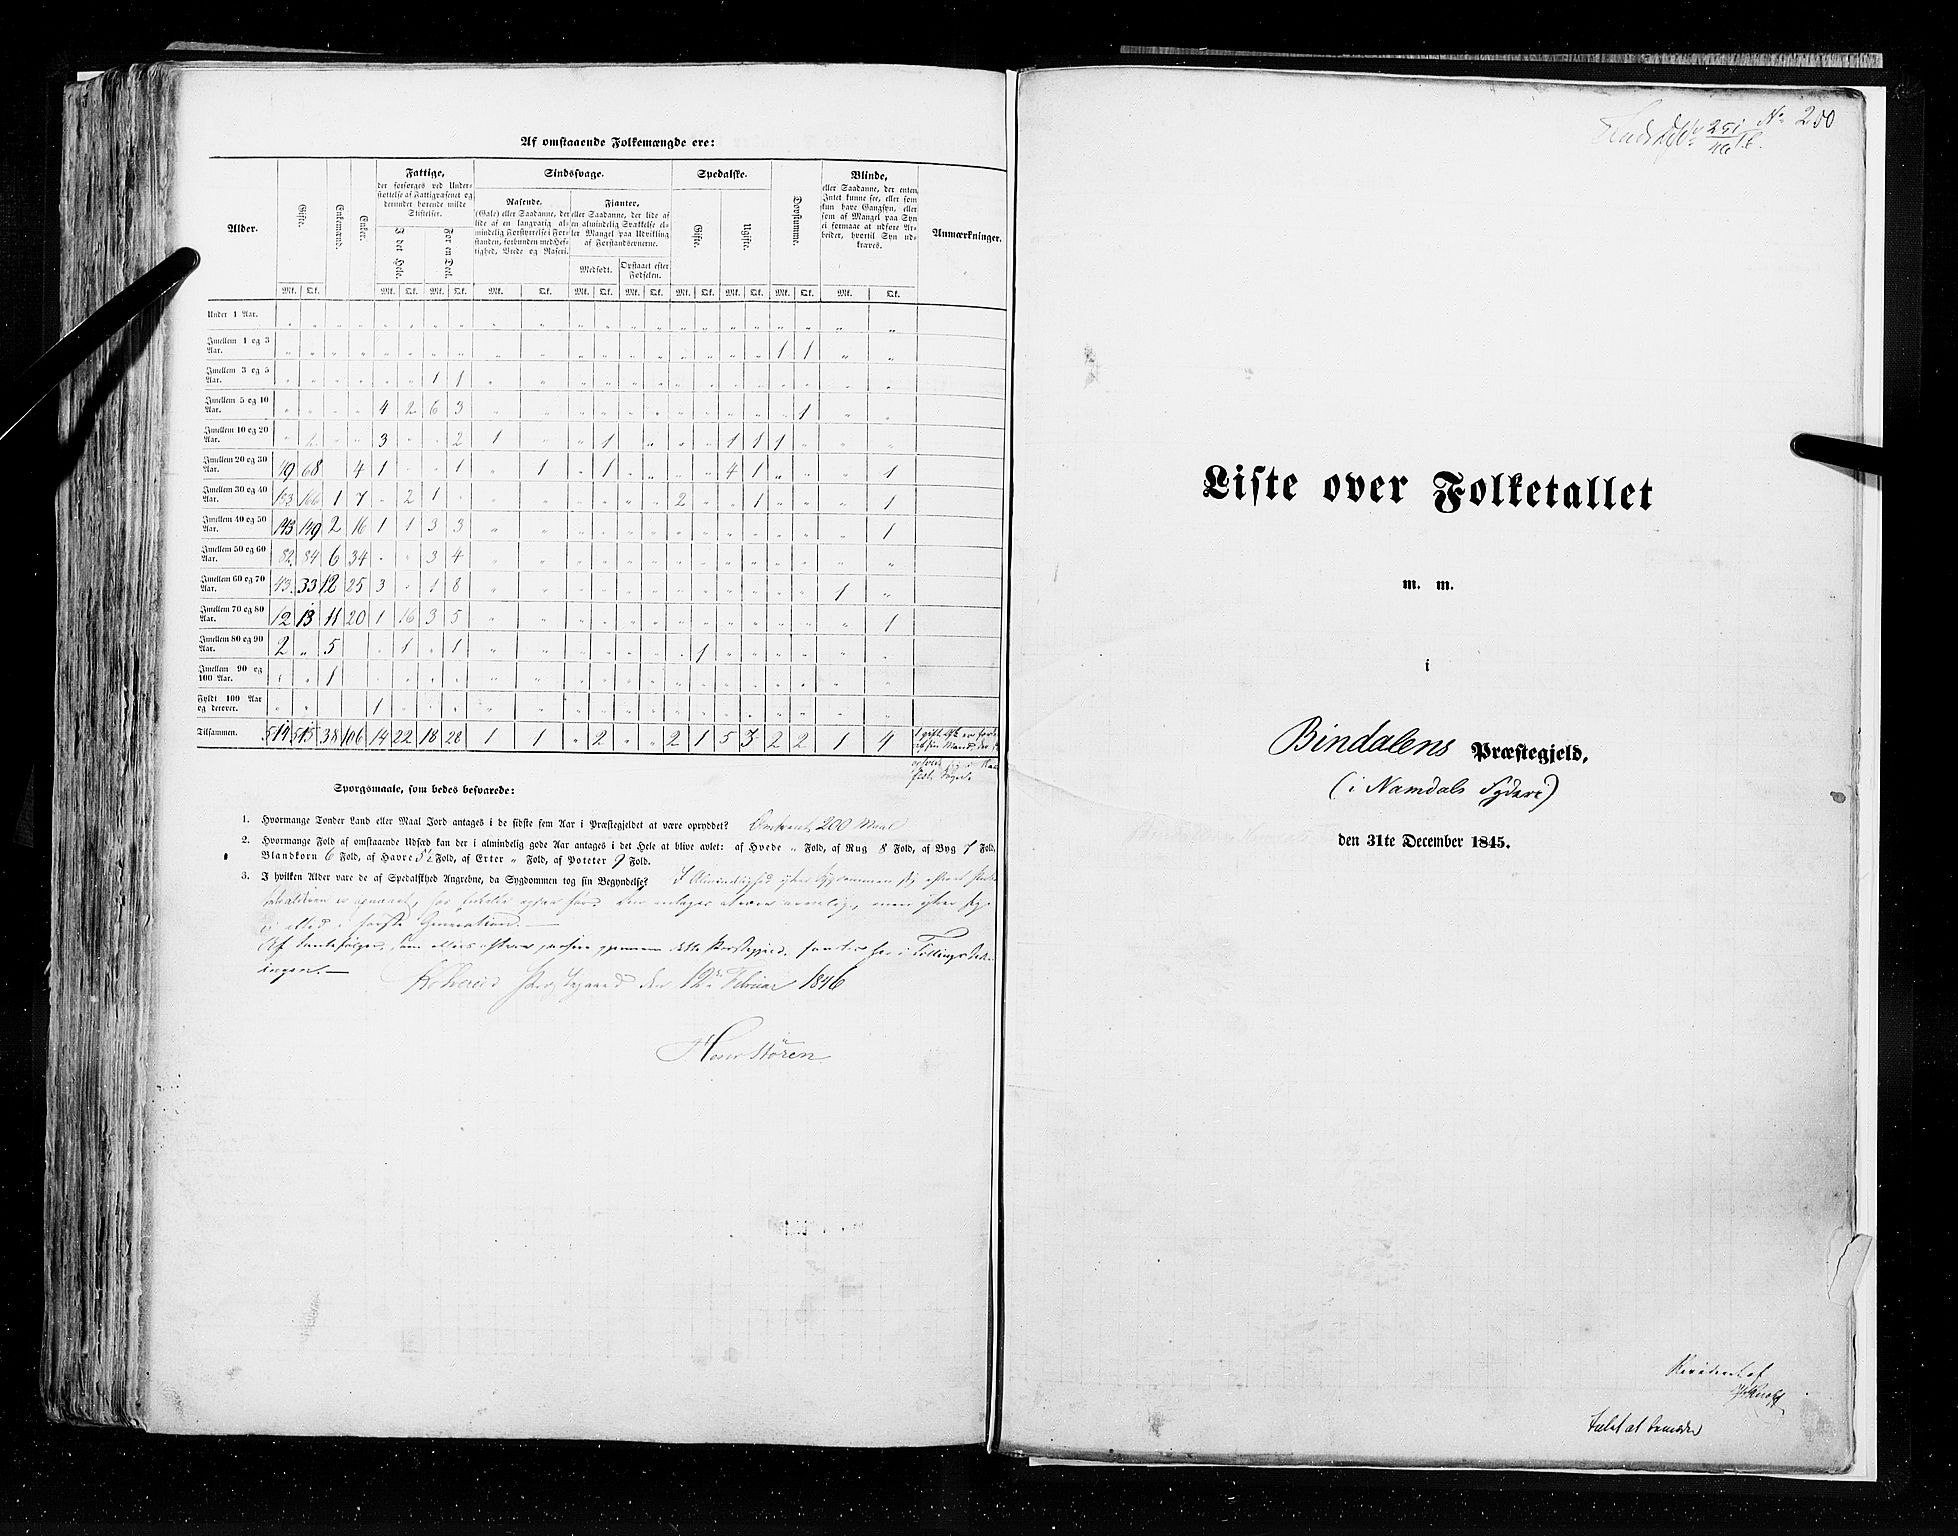 RA, Census 1845, vol. 9A: Nordre Trondhjems amt, 1845, p. 200